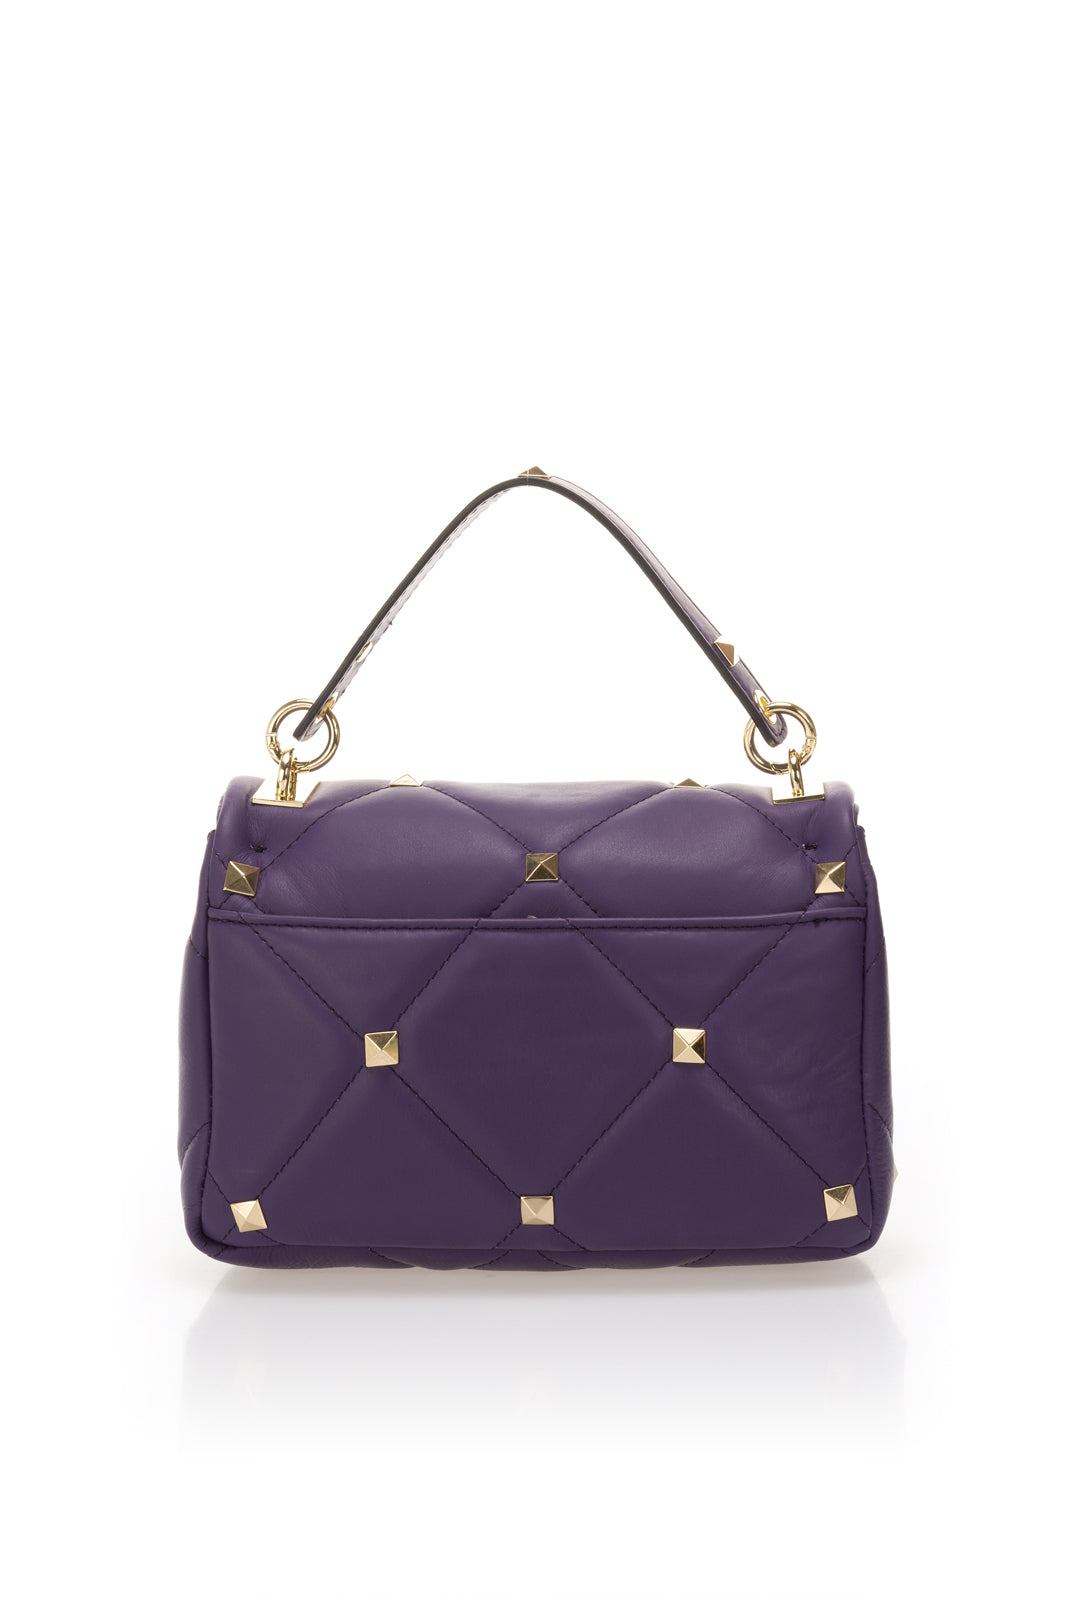 Kylie - Top Handle Handbag